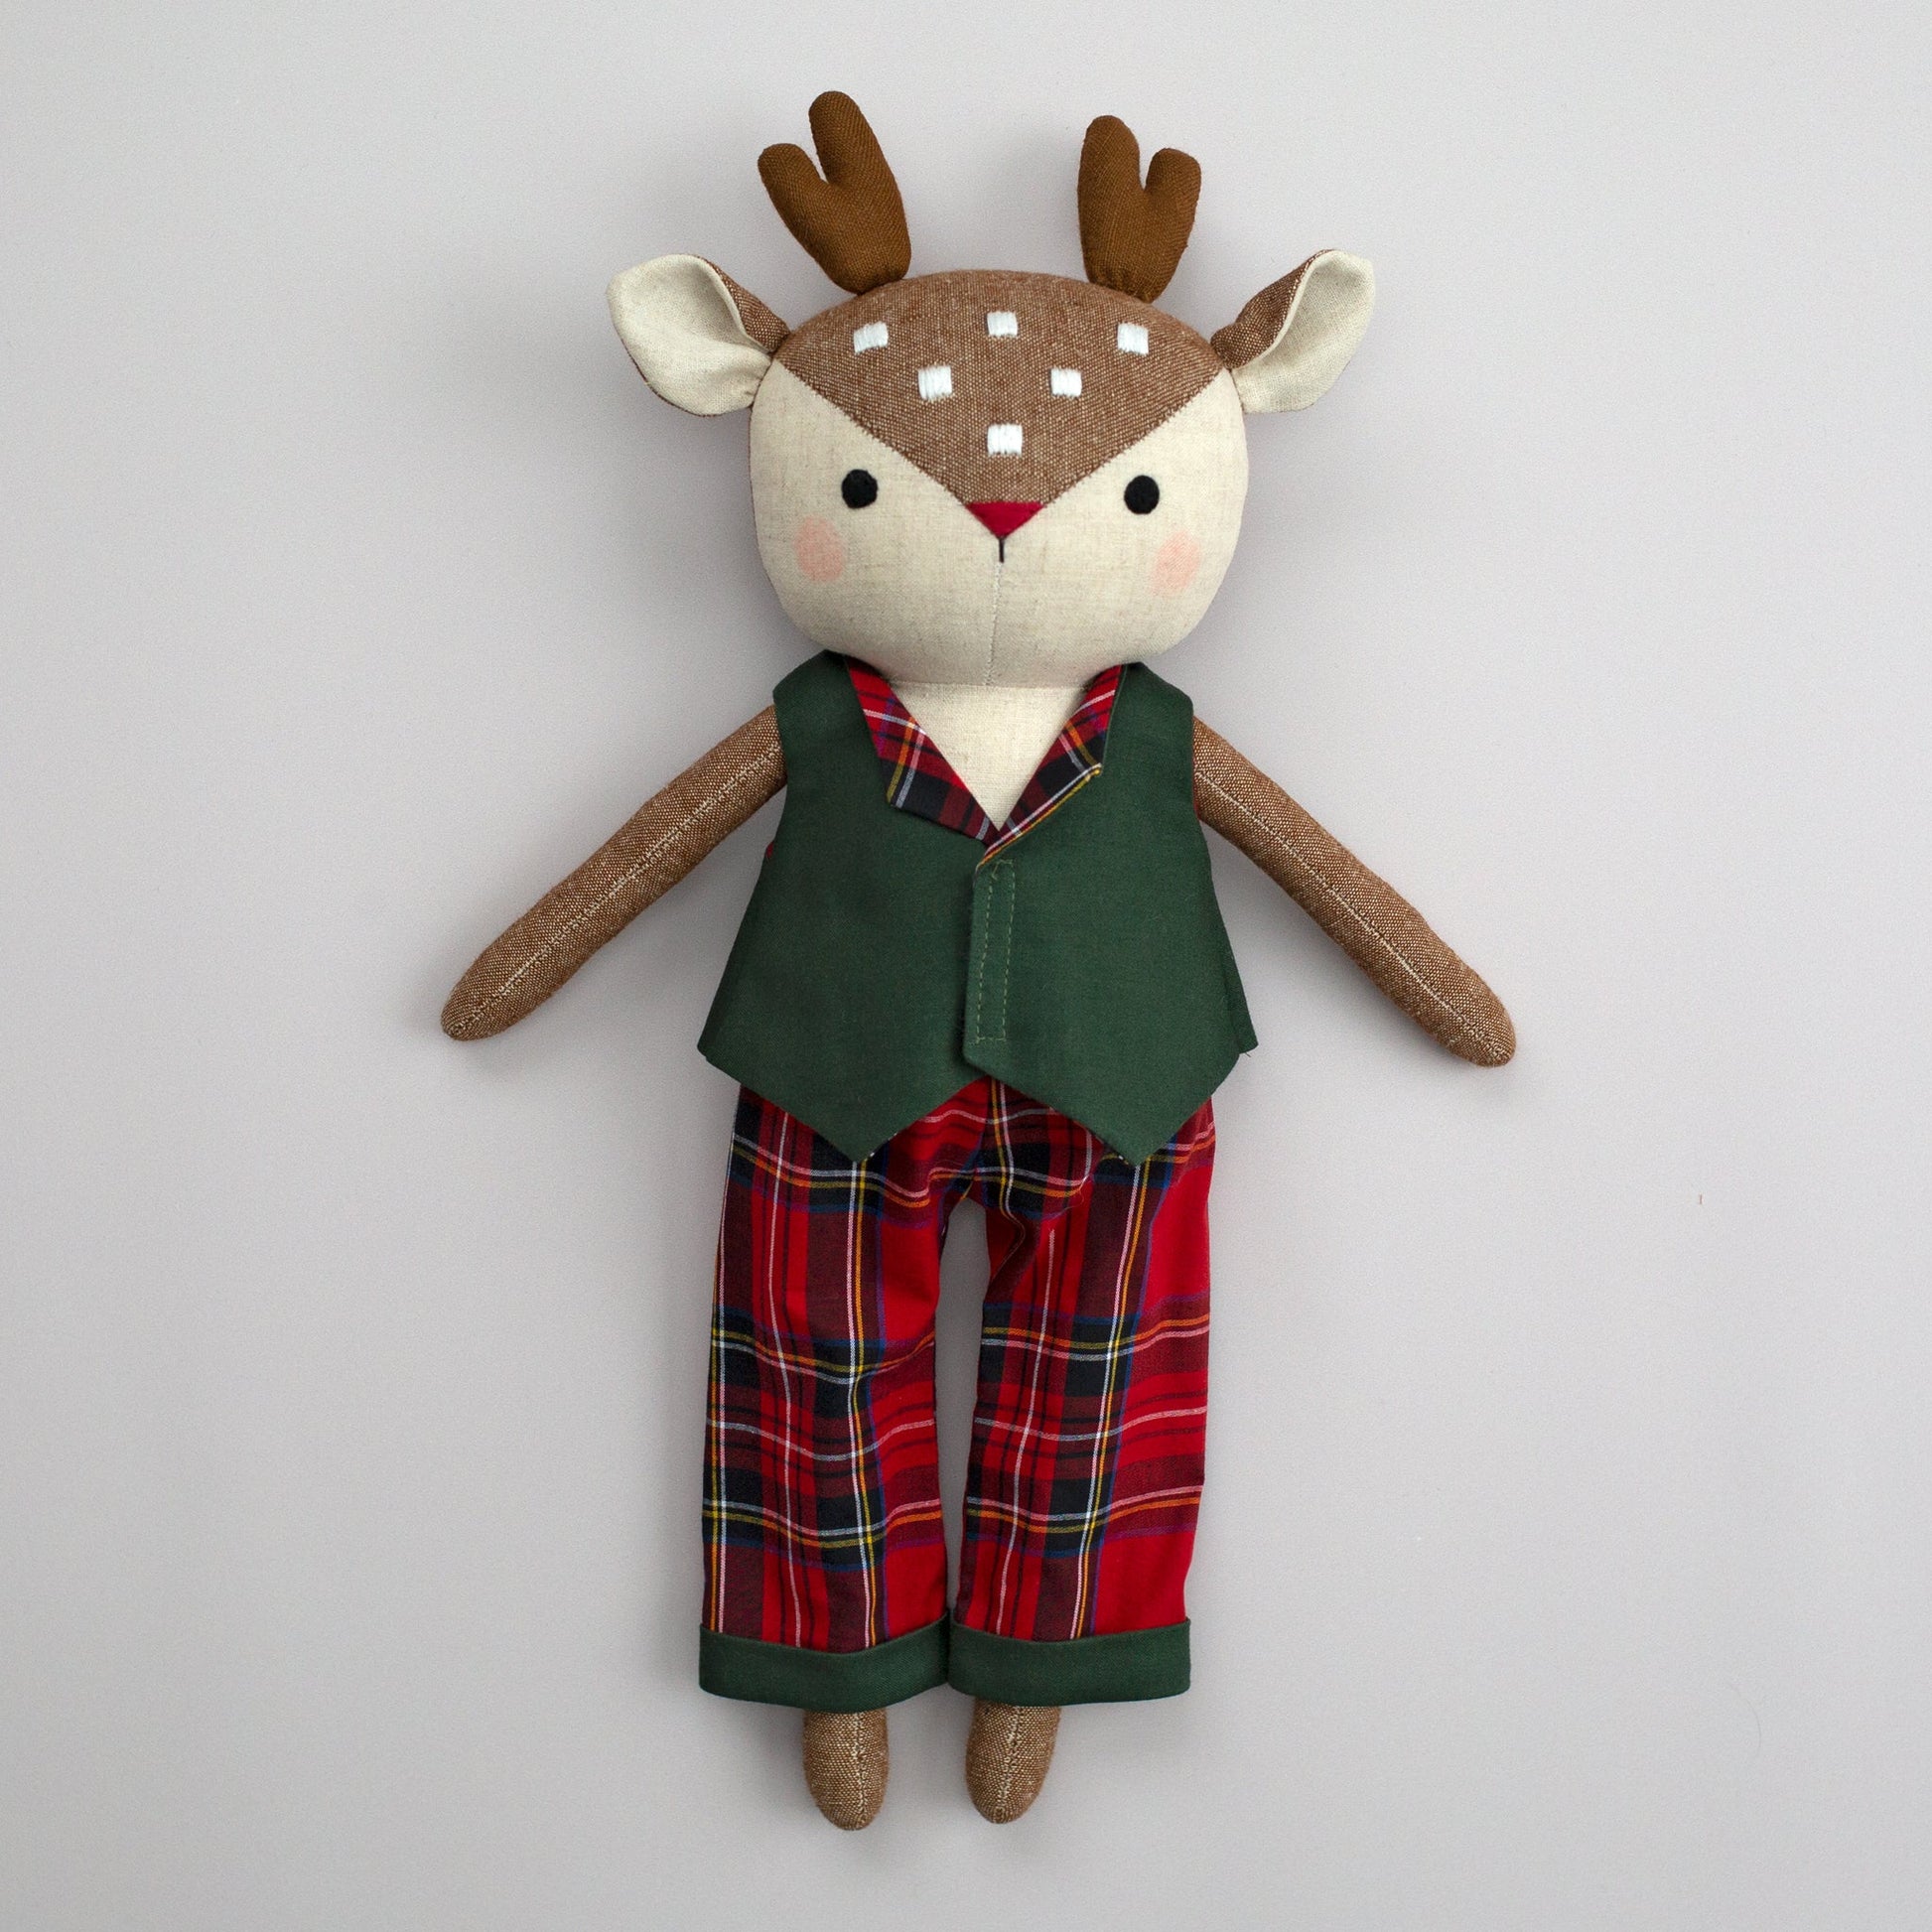 stuffed animals sewing patterns pdf Bear, Bunny, Deer - DailyDoll Shop